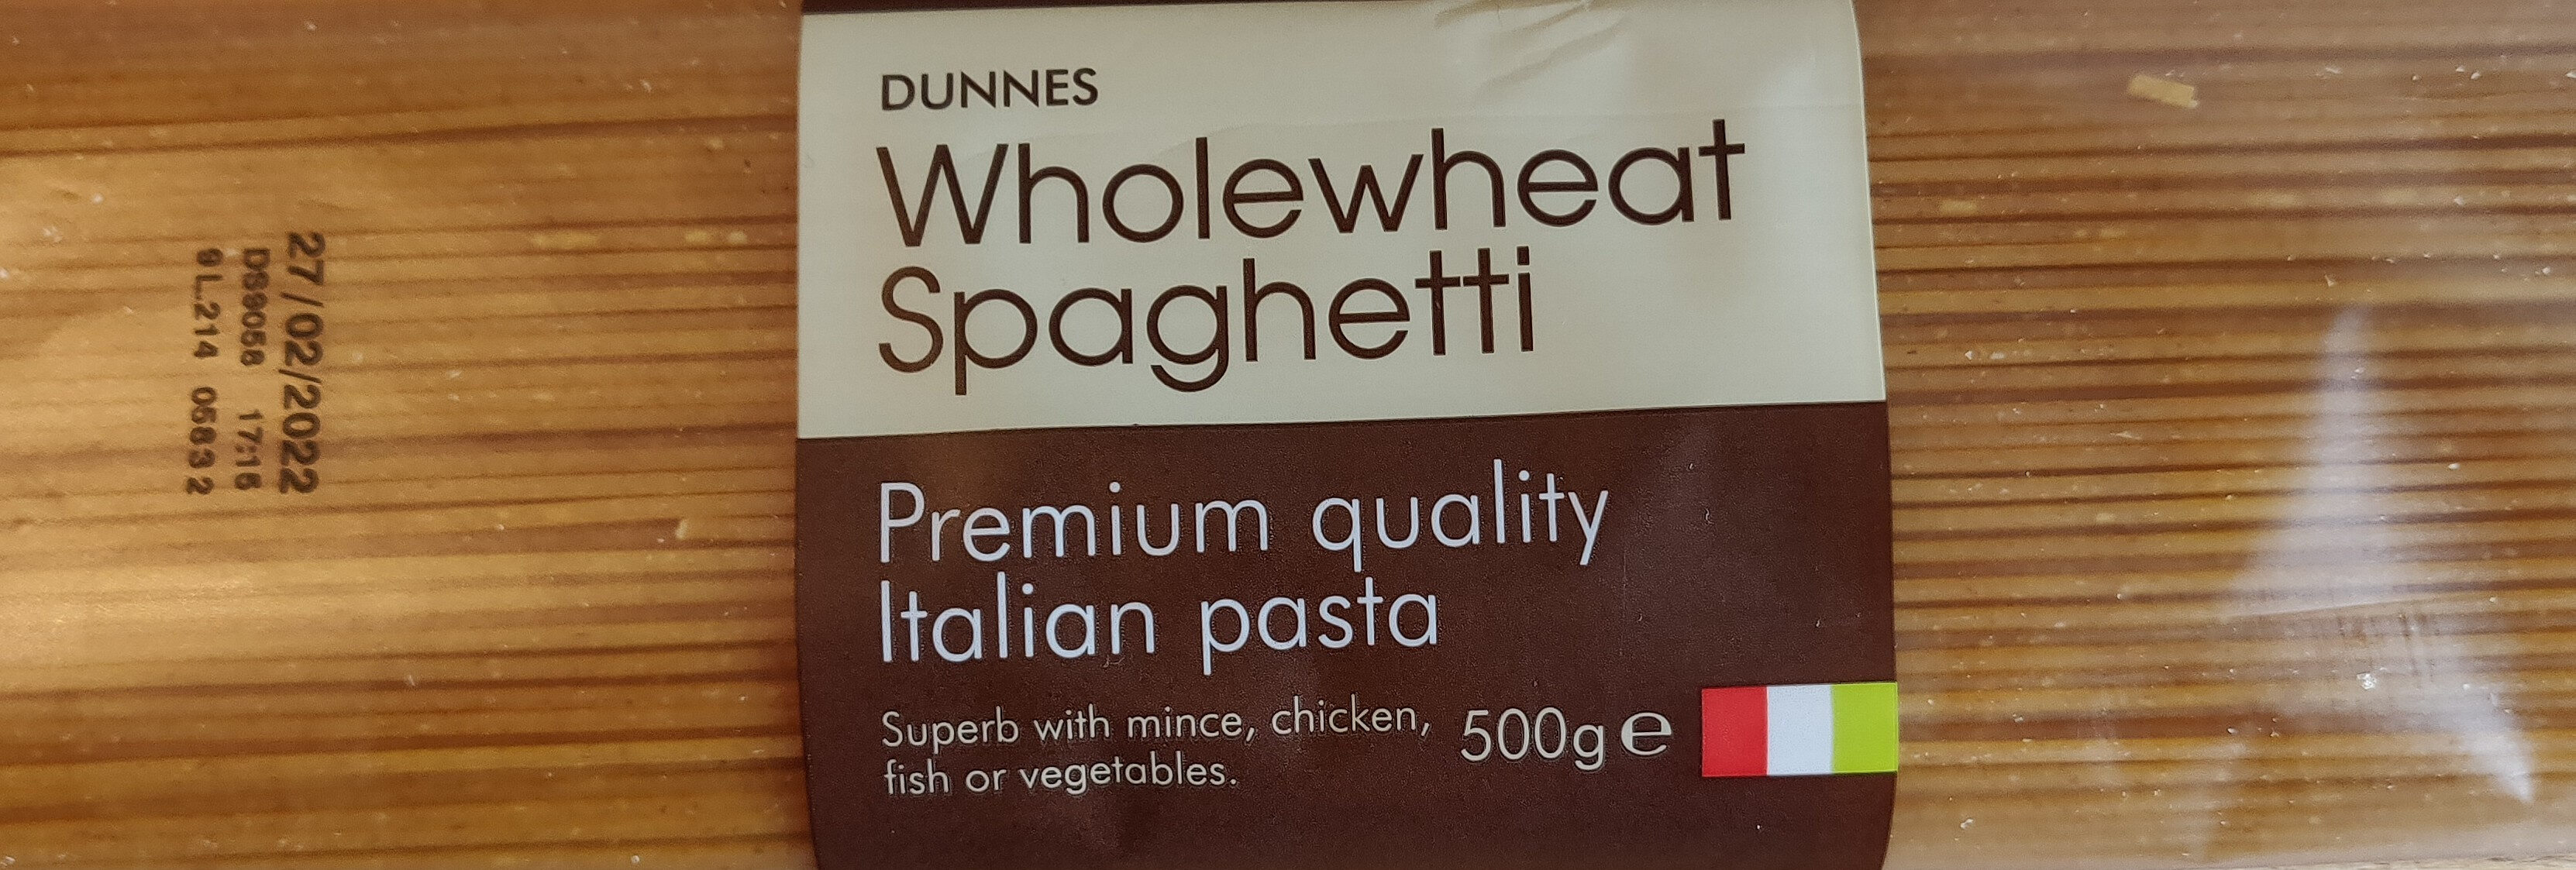 Wholewheat Spaghetti - Product - en